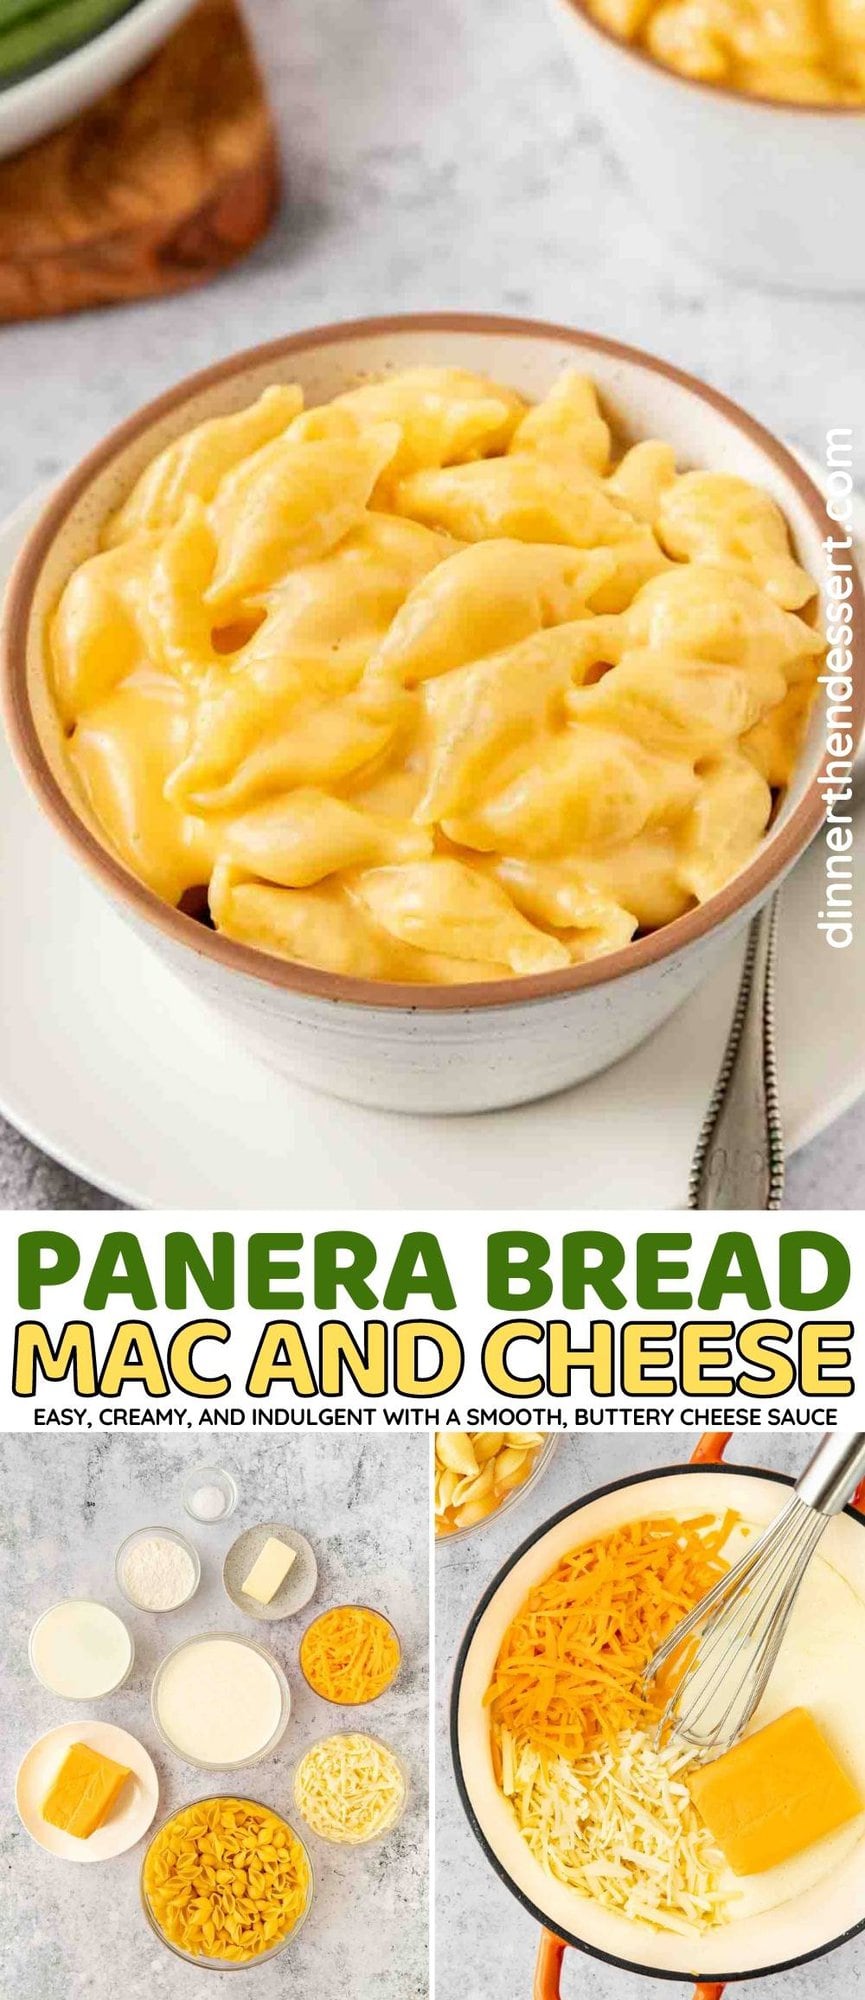 Panera Mac and Cheese collage